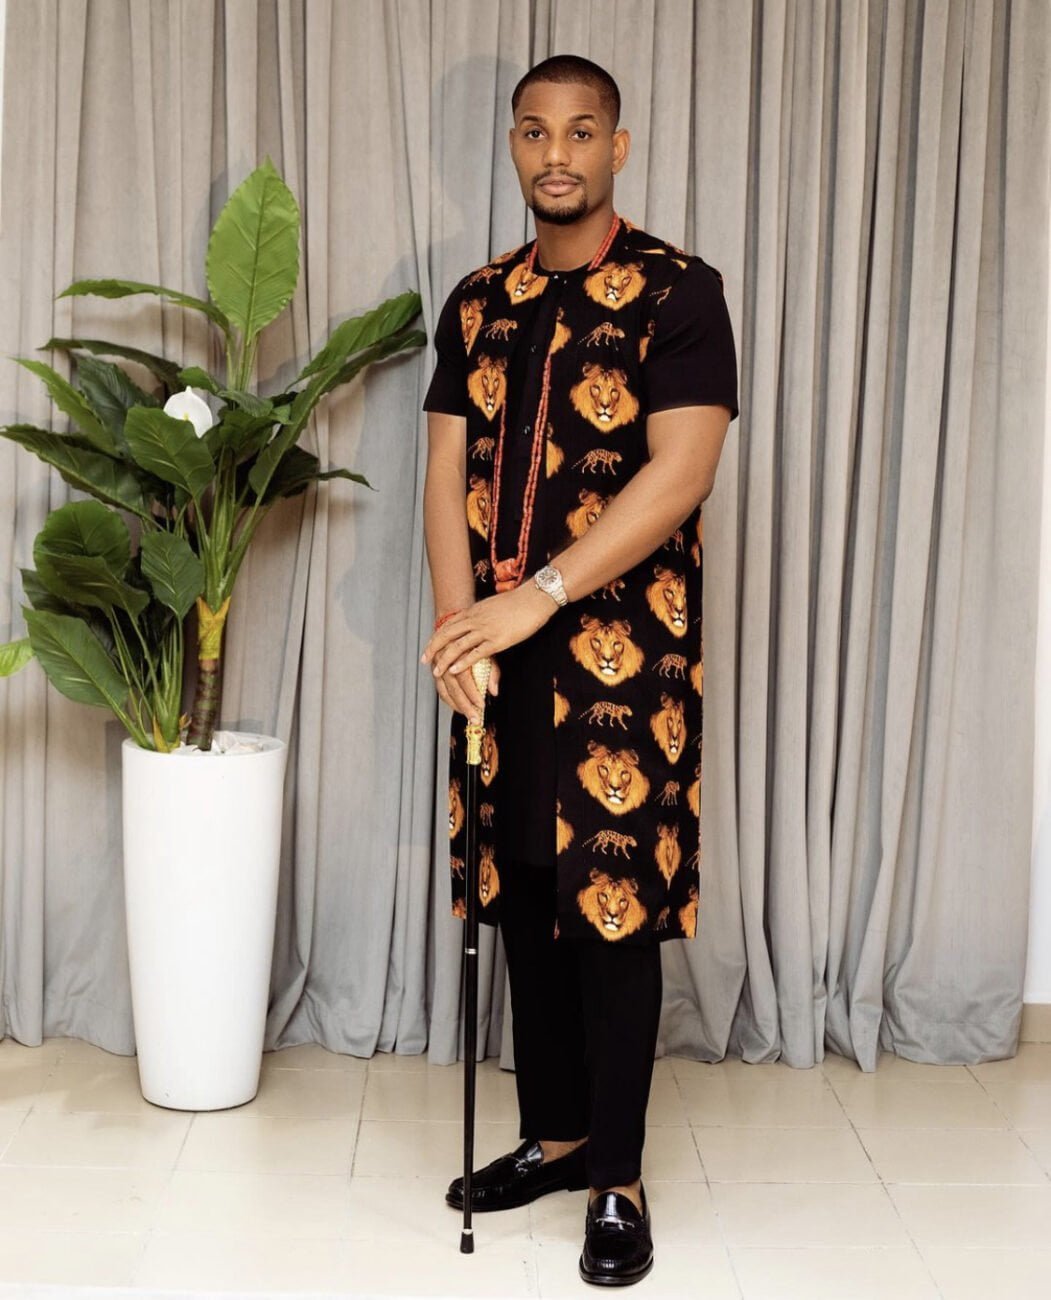 Alex Ekubo rocks a stylish ‘isi-ahi’ outfit.